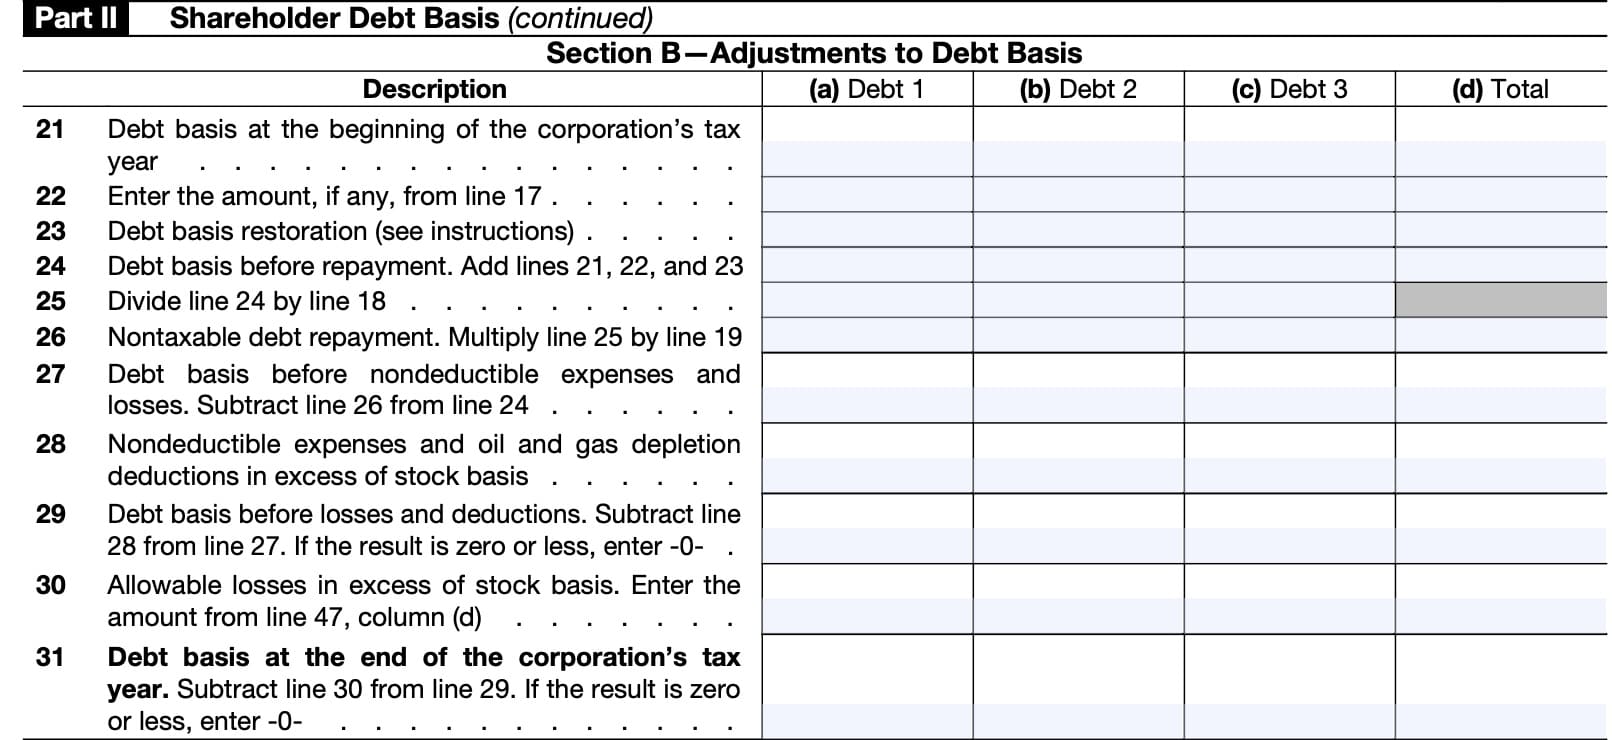 part II, shareholder debt basis, section B-adjustments to debt basis